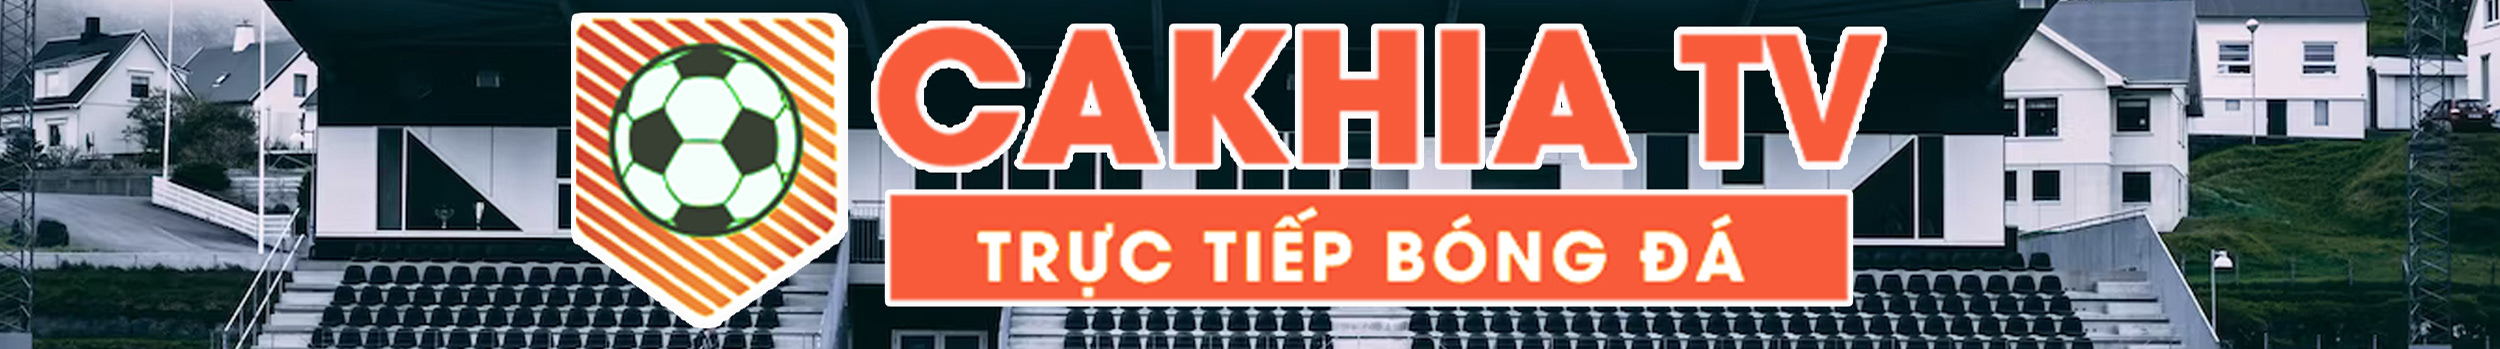 Cakhia TV Trực Tiếp Bóng Đá's profile banner